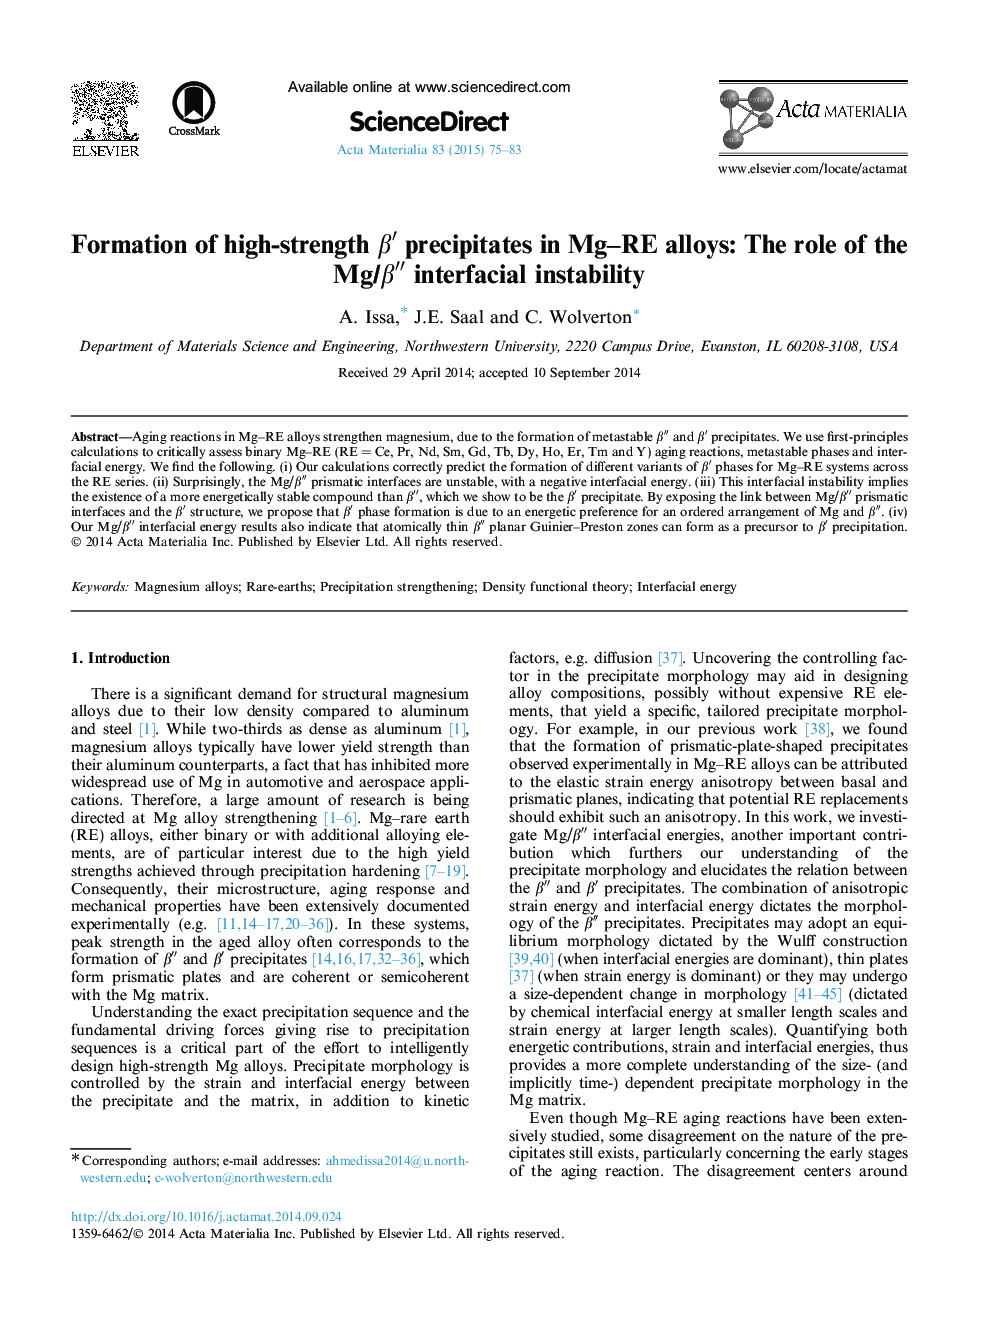 Formation of high-strength Î²â² precipitates in Mg-RE alloys: The role of the Mg/Î²â³ interfacial instability